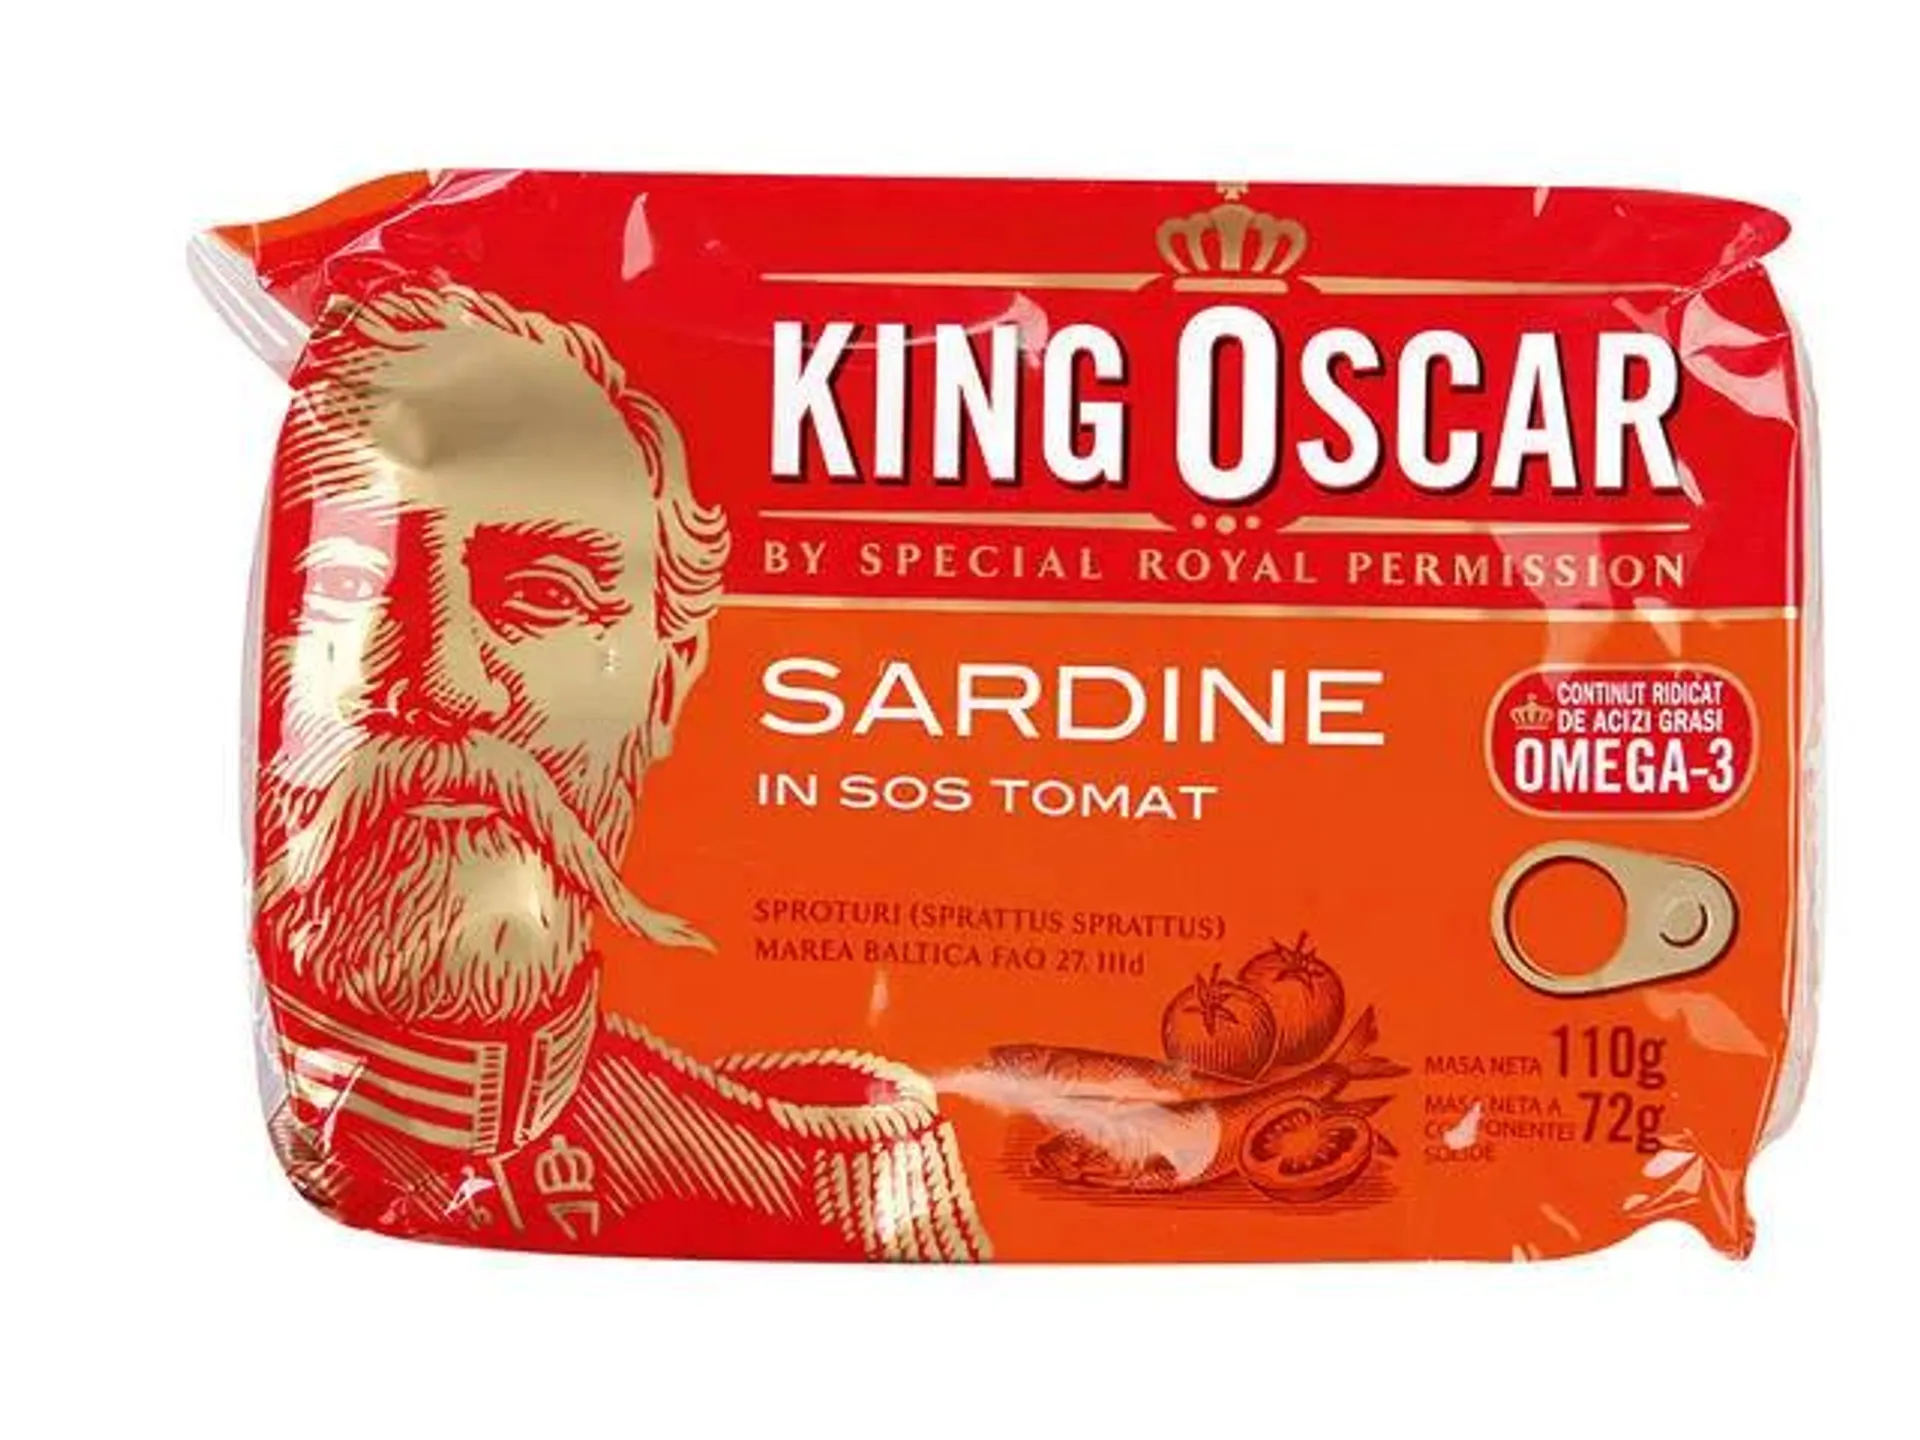 Sardine King Oscar in sos tomat 110g